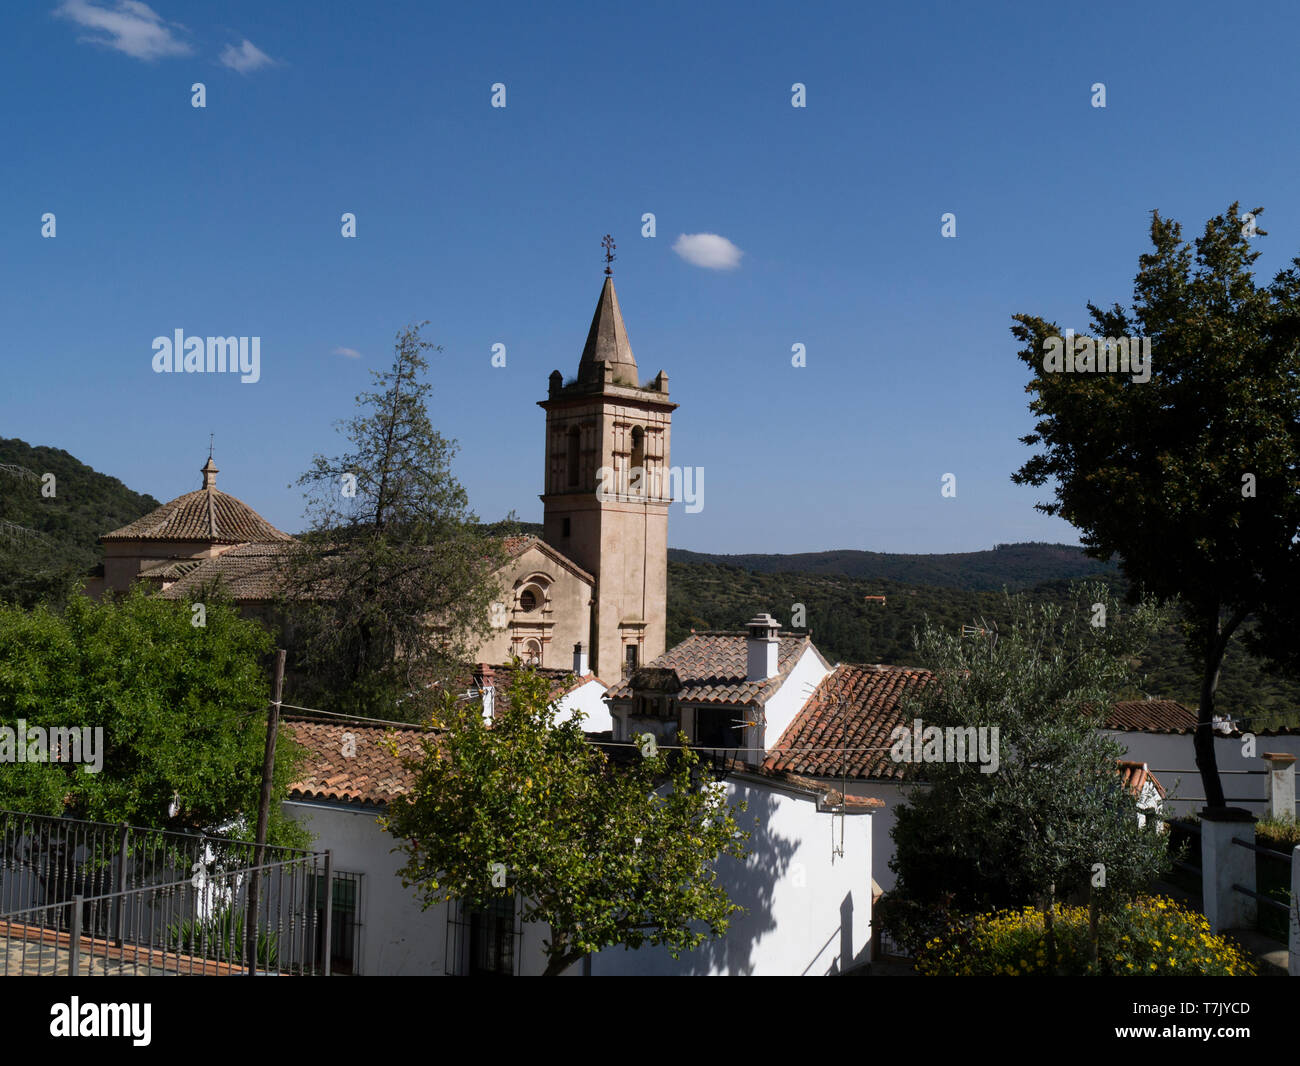 village of Alajar, Sierra de Aracena, Andalucia,Spain,Europe Stock Photo